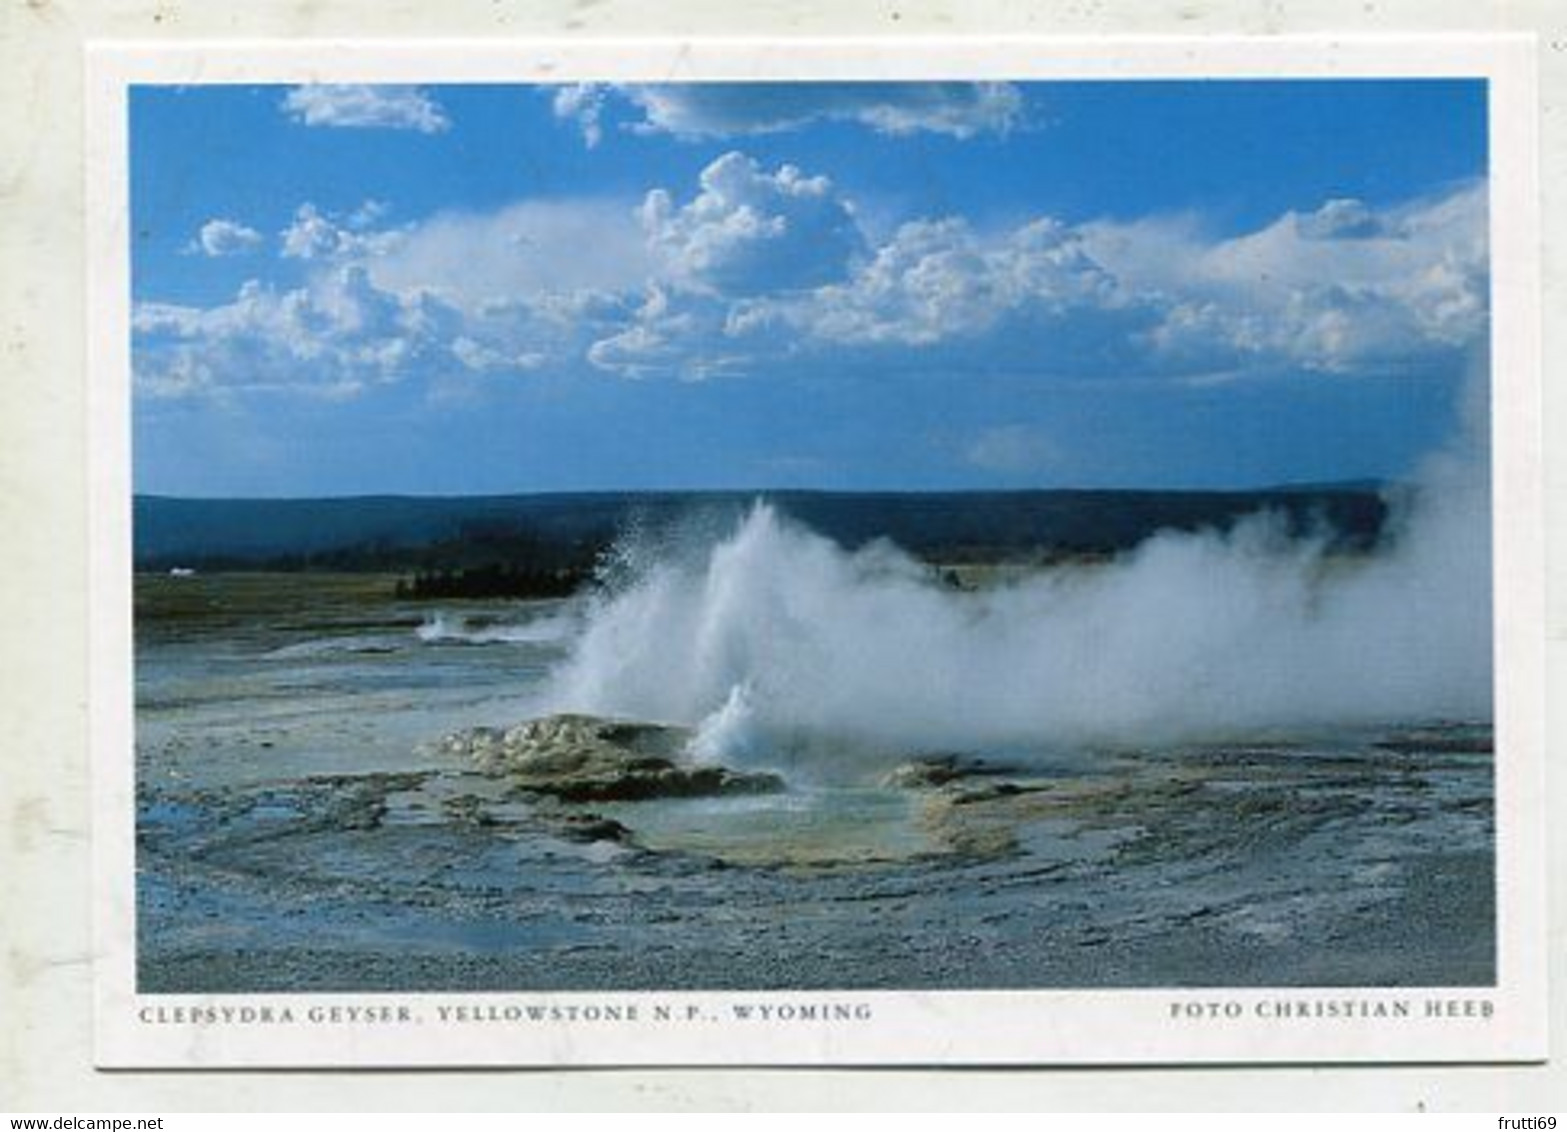 AK 057484 USA - Wyoming - Yellowstone N. P. - Clepsydra Geyser - Yellowstone